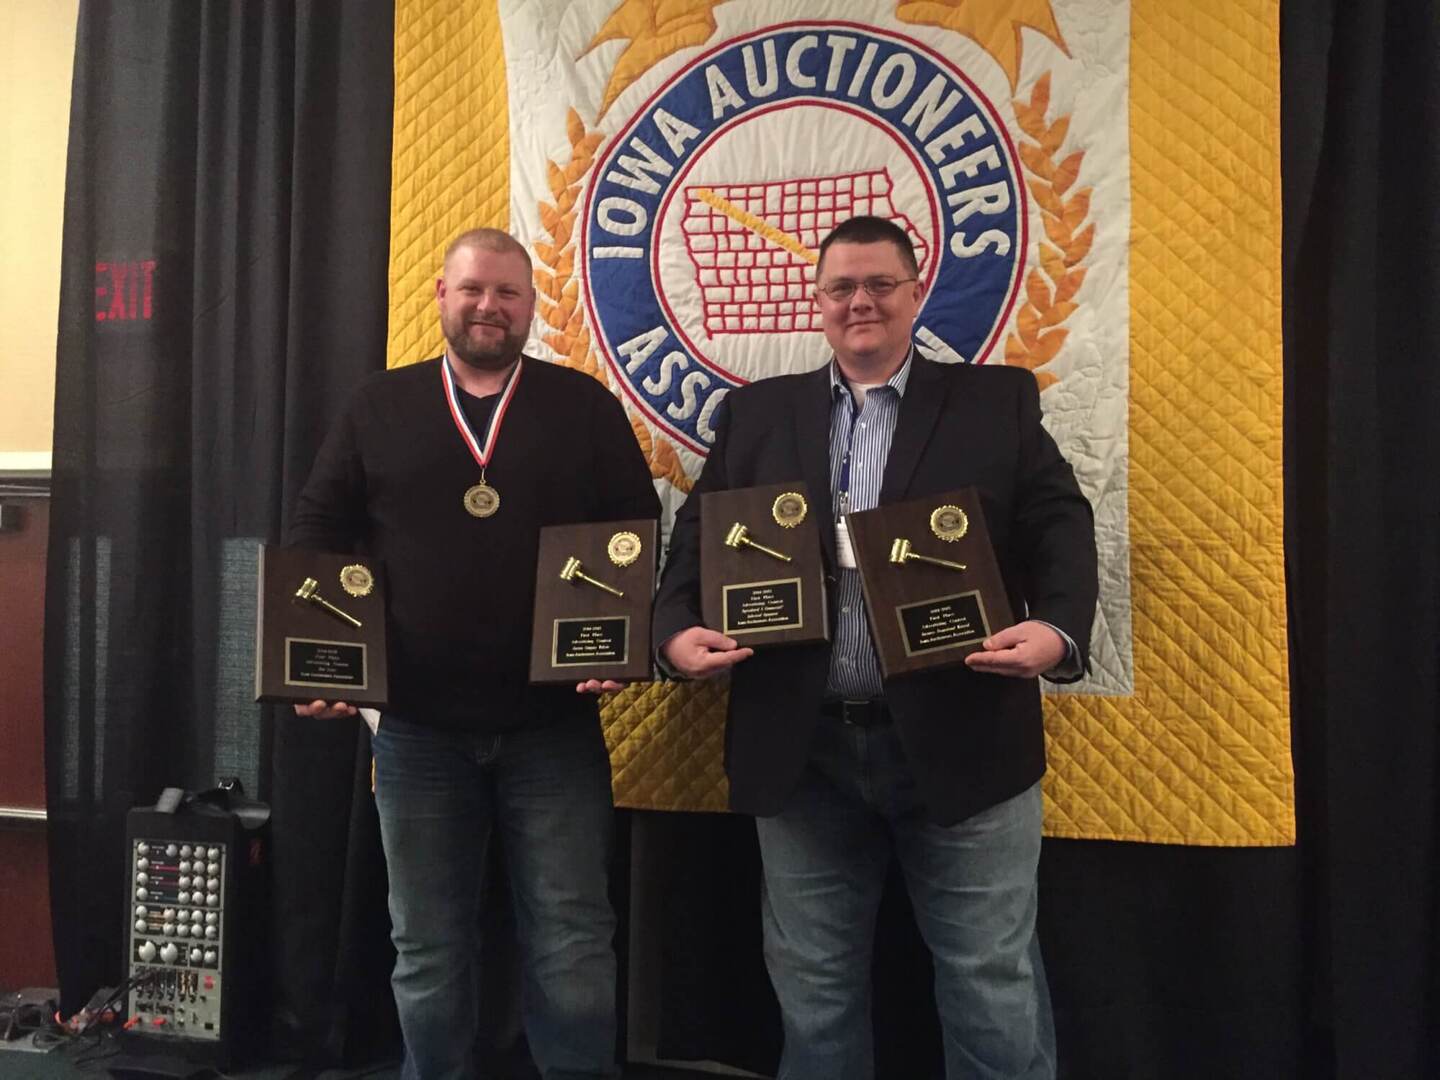 Award winning auctioneers